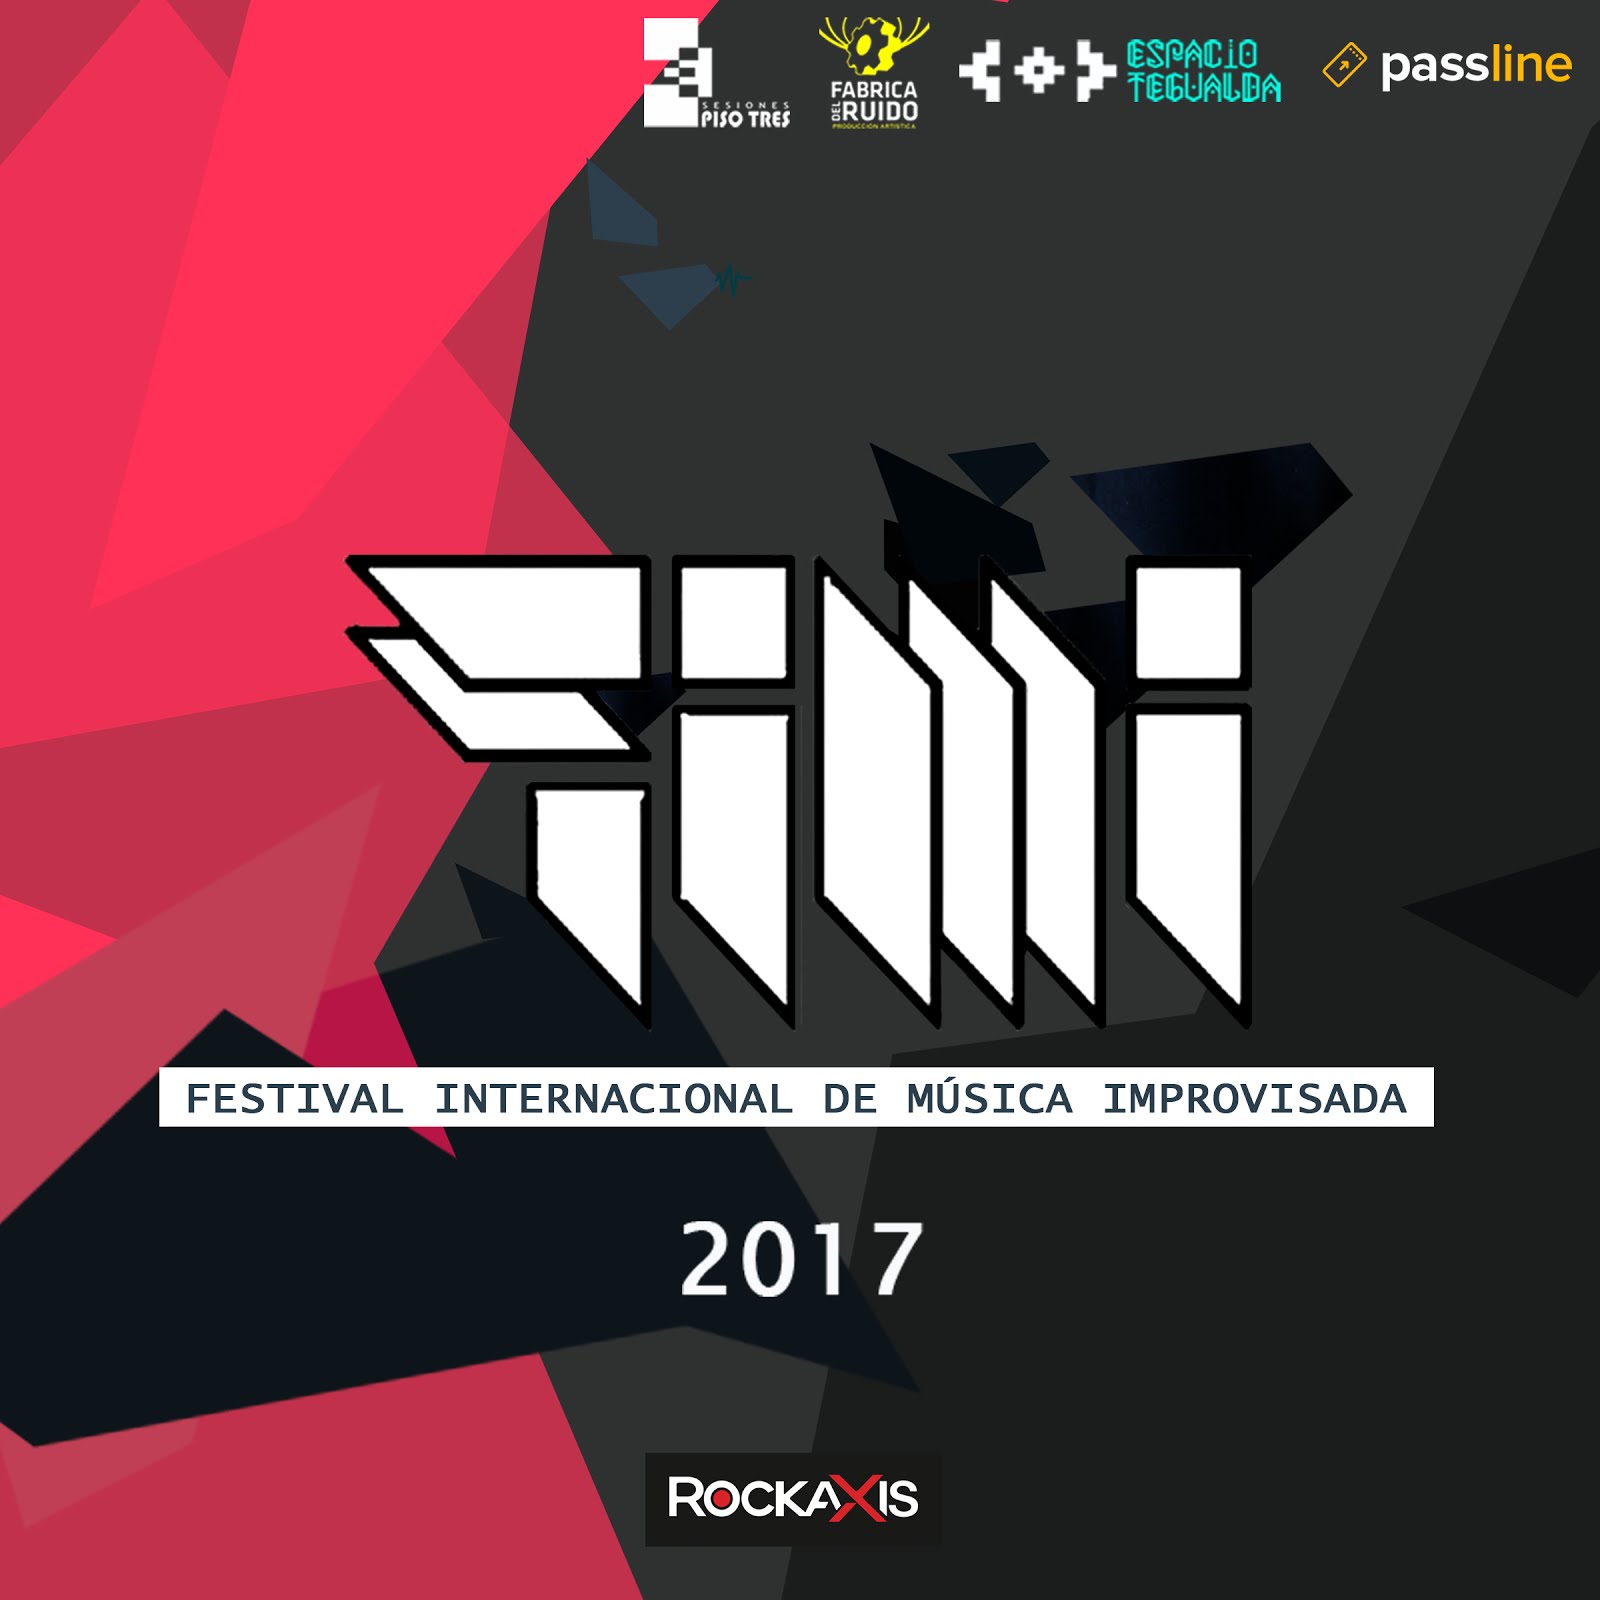 FIMI 2017